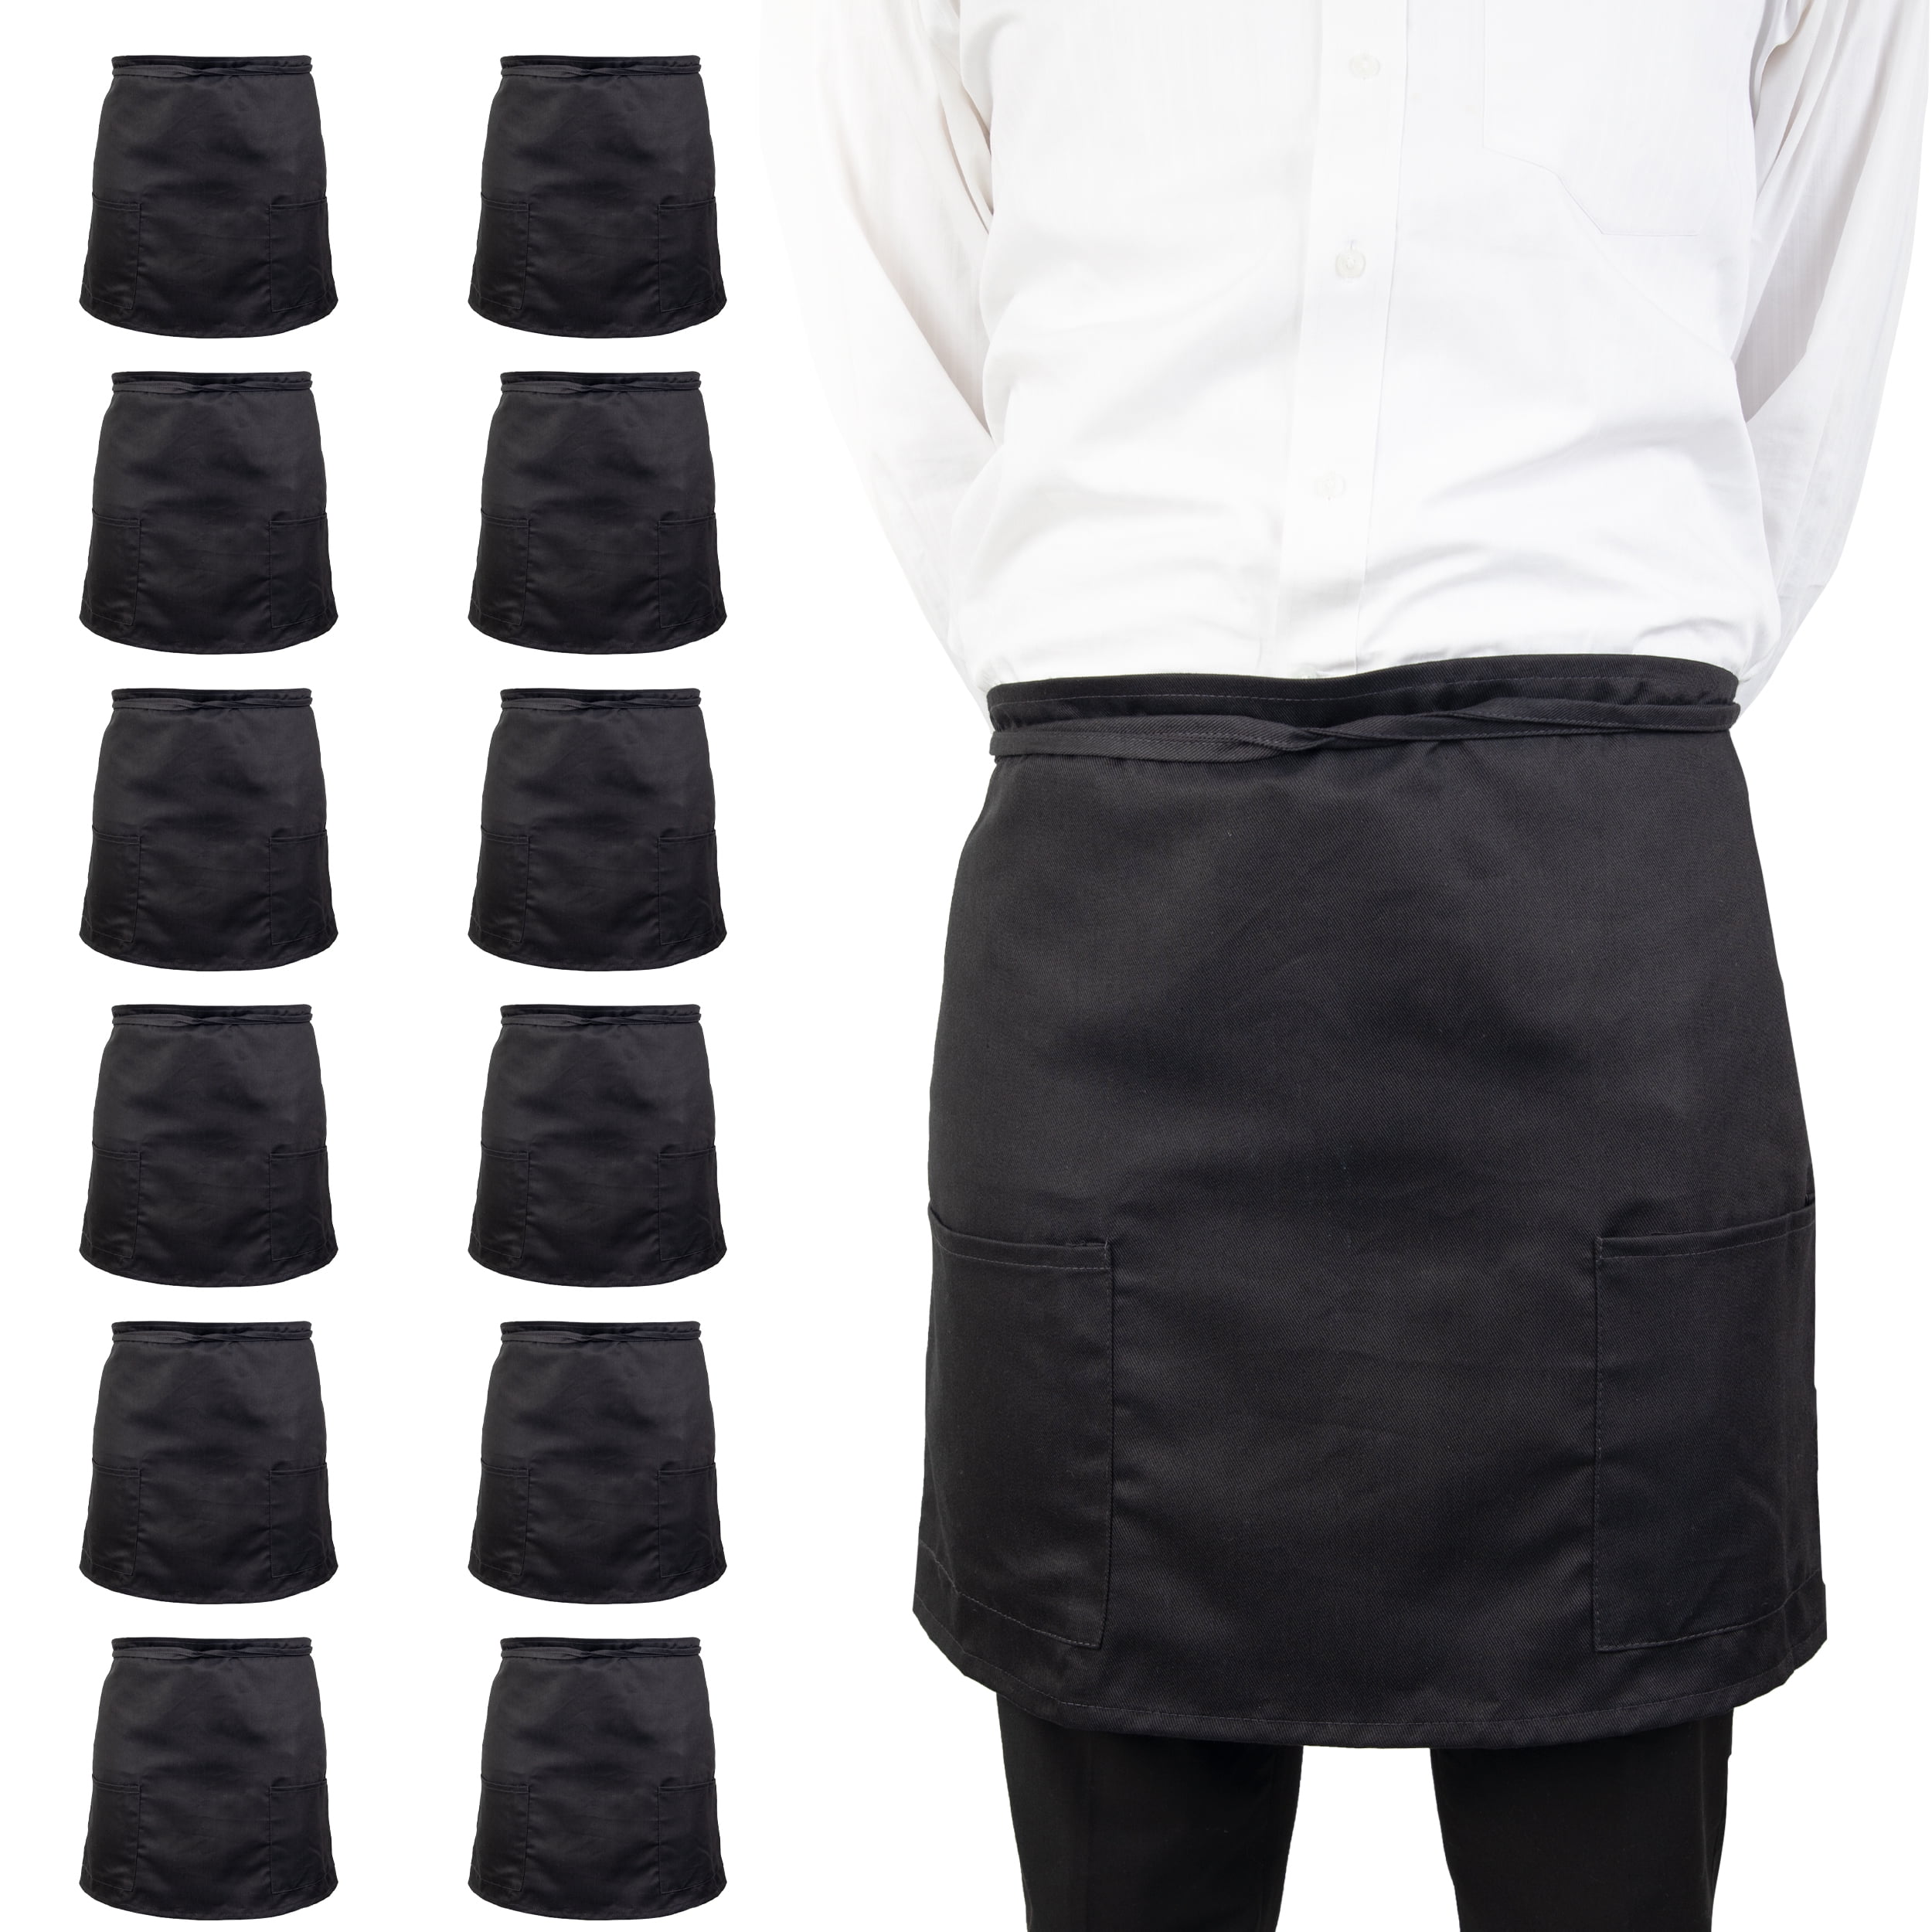 100 x Half 1/2 Size Bar Apron Pockets 100% Cotton Bistro Waiter £1.24 per apron! 